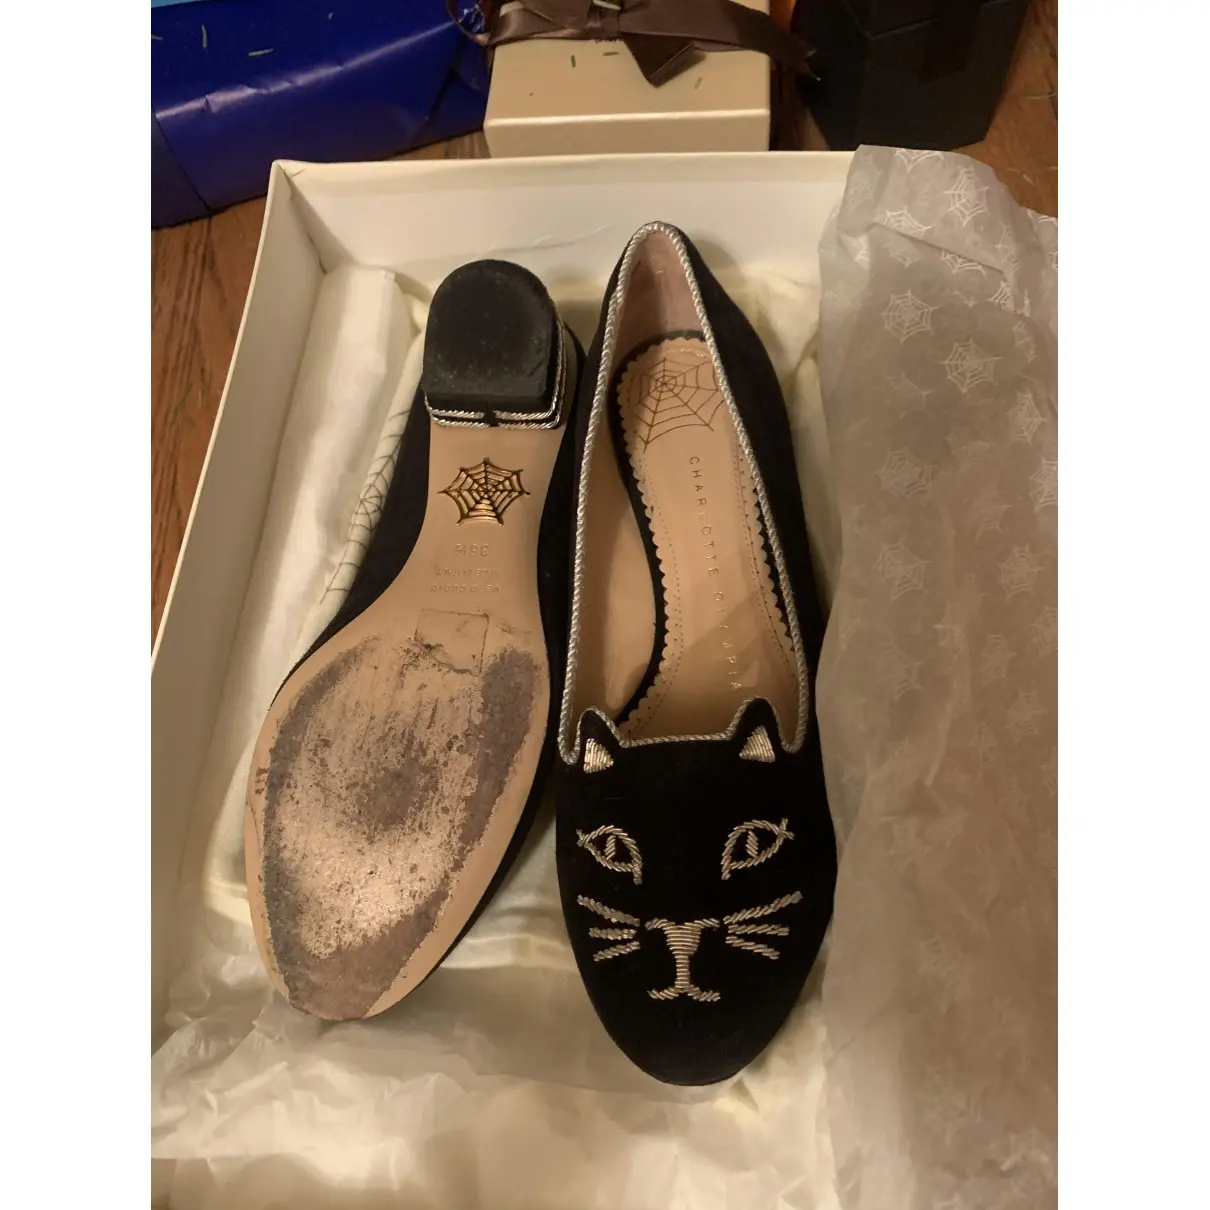 Buy Charlotte Olympia Kitty heels online